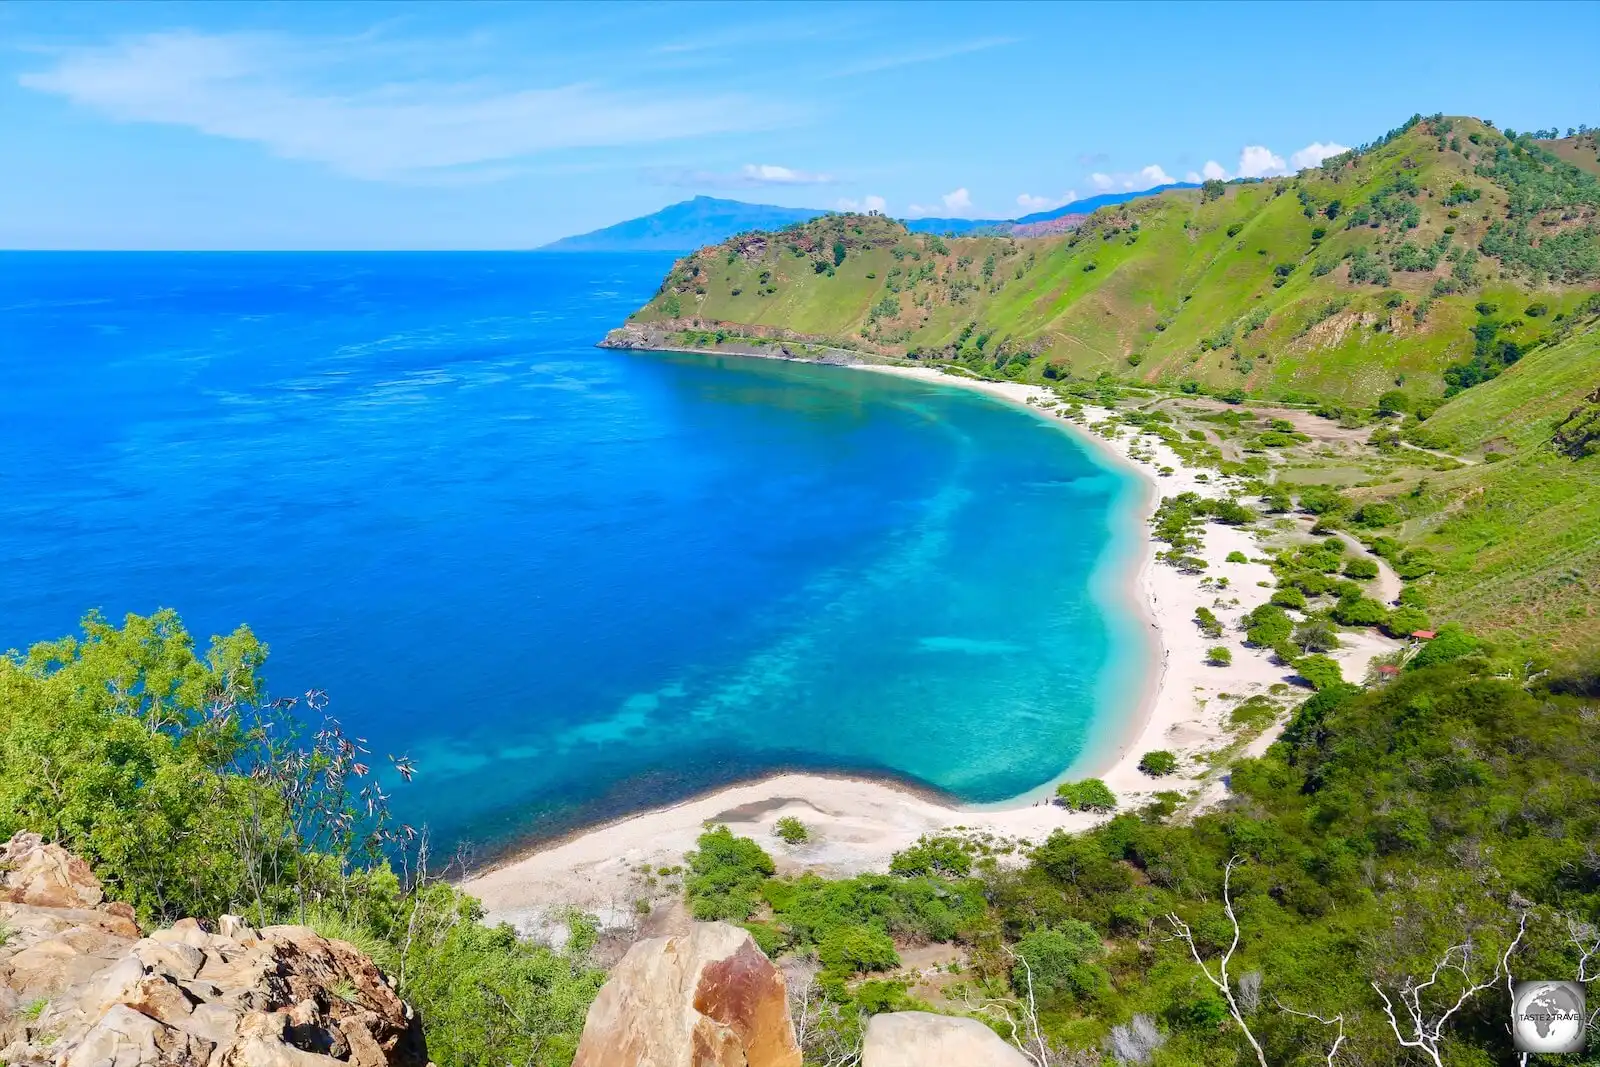 Timor-Leste tourism